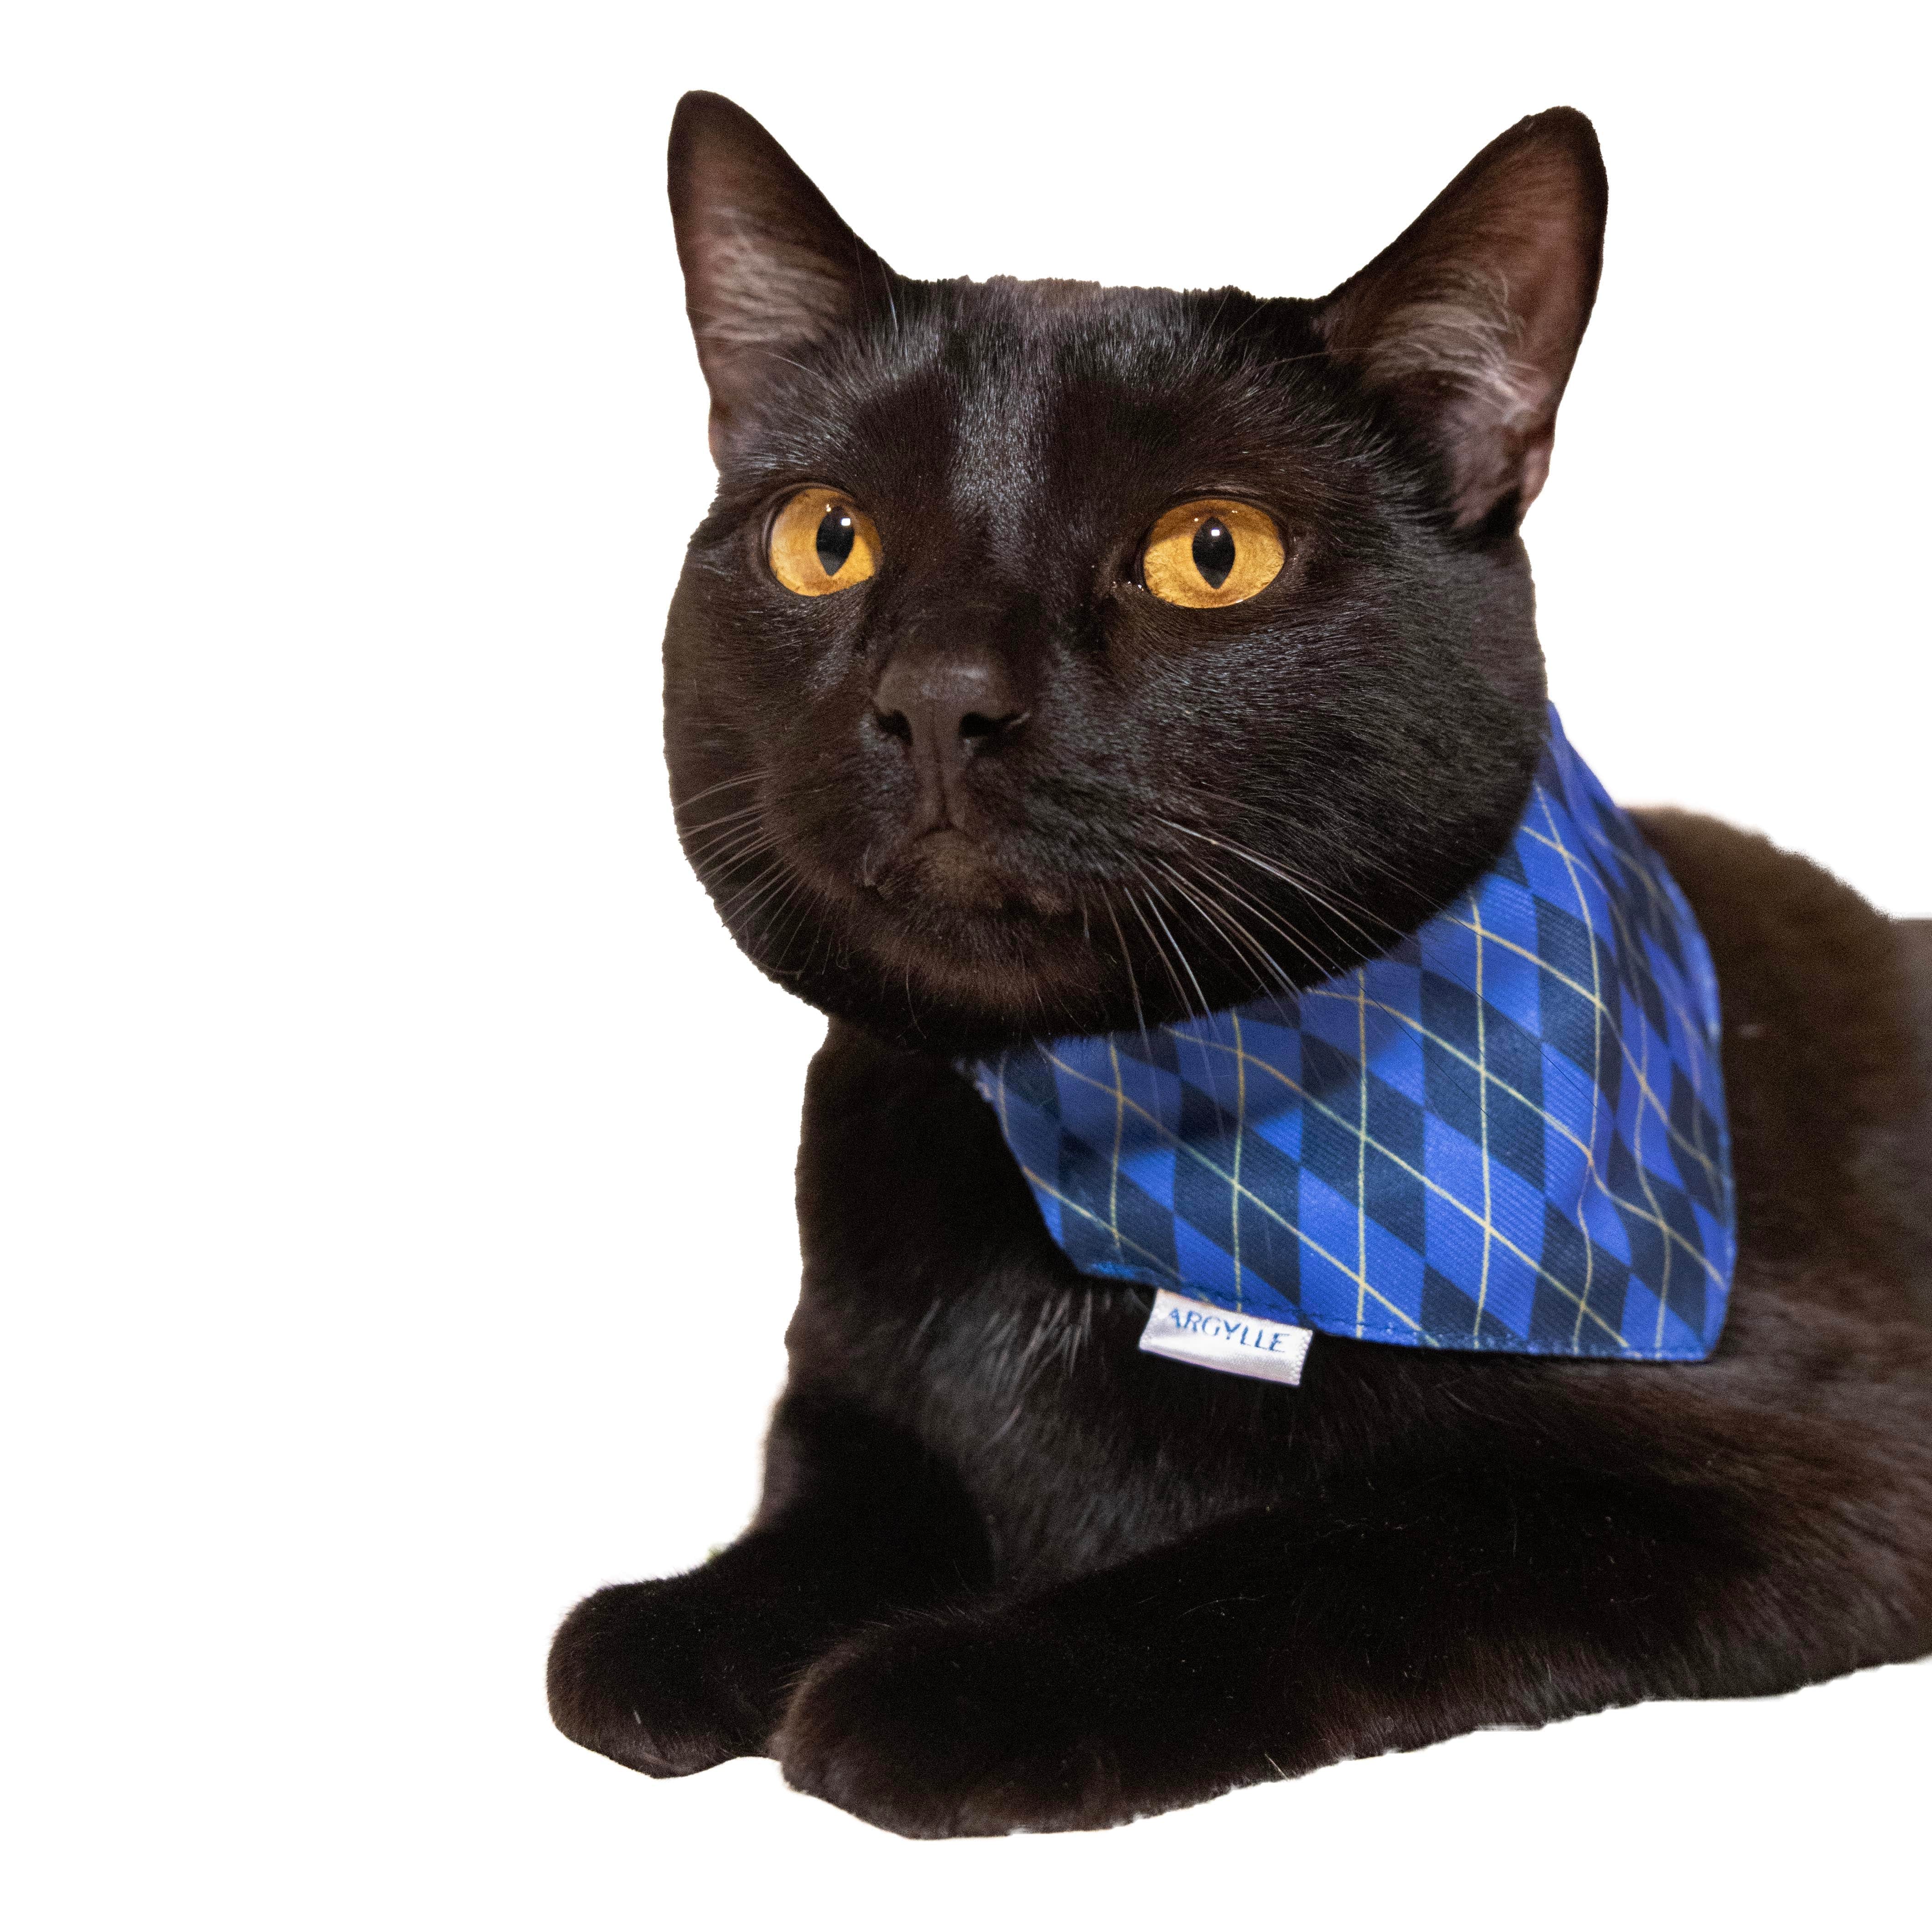 Argylle x Travel Cat Collar & Bandana Set - Officially Licensed